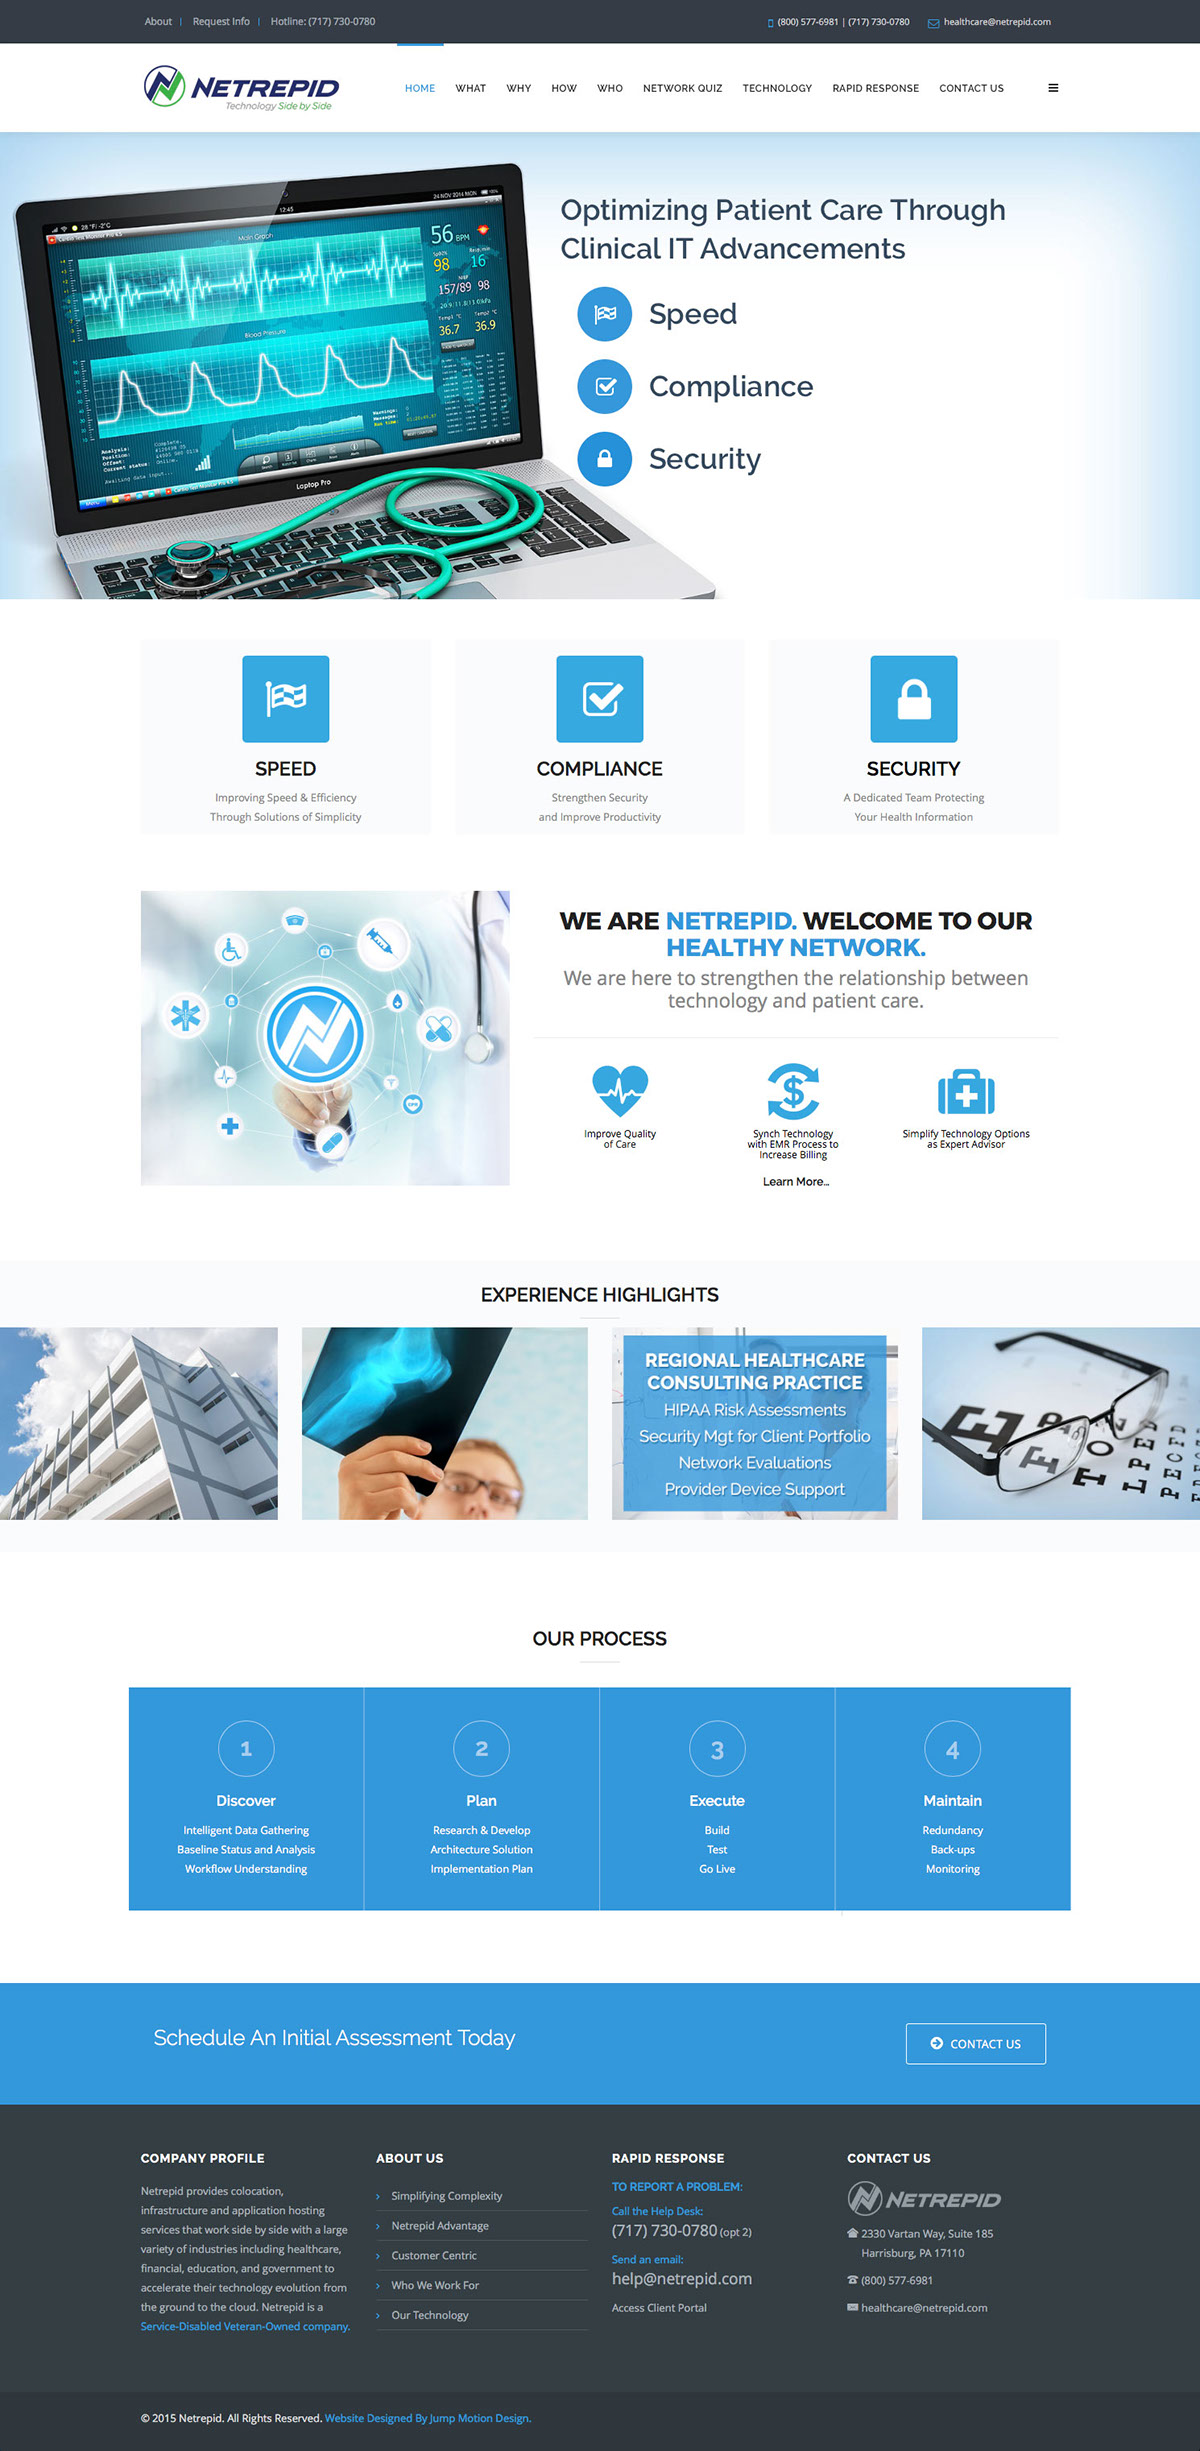 Joomla CMS cms Responsive Design healthcare technology